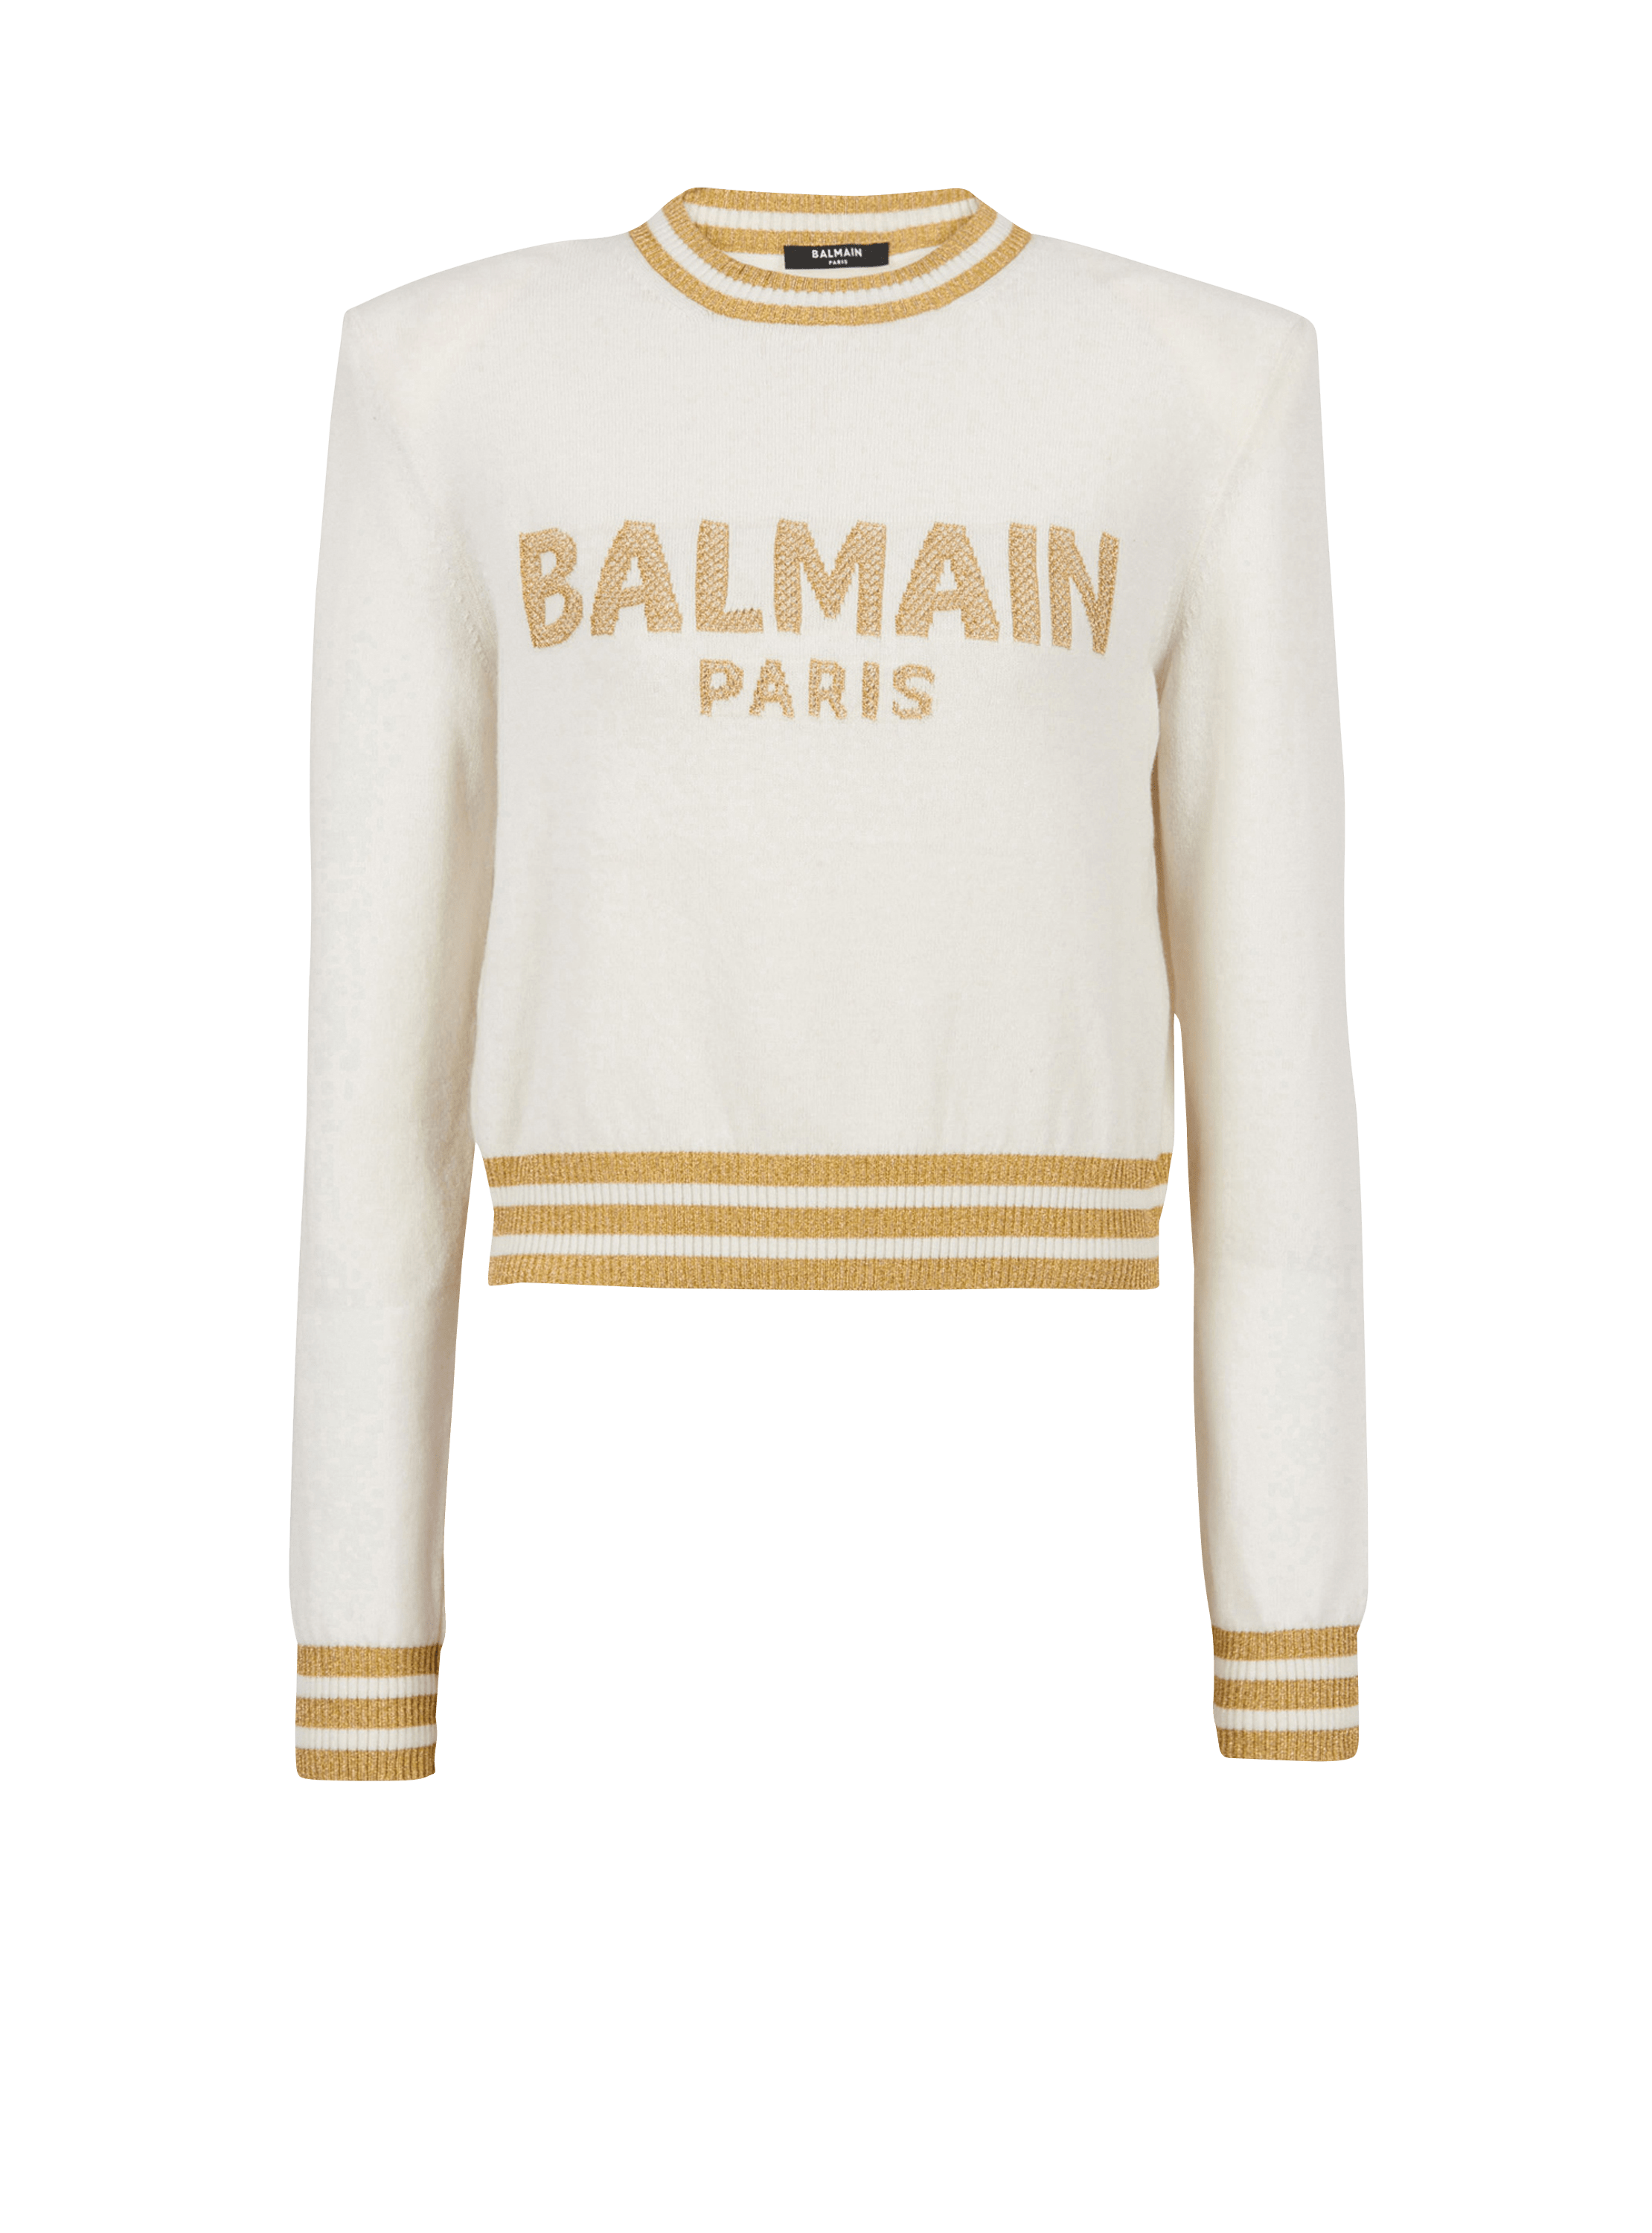 Cropped wool sweatshirt with gold Balmain logo